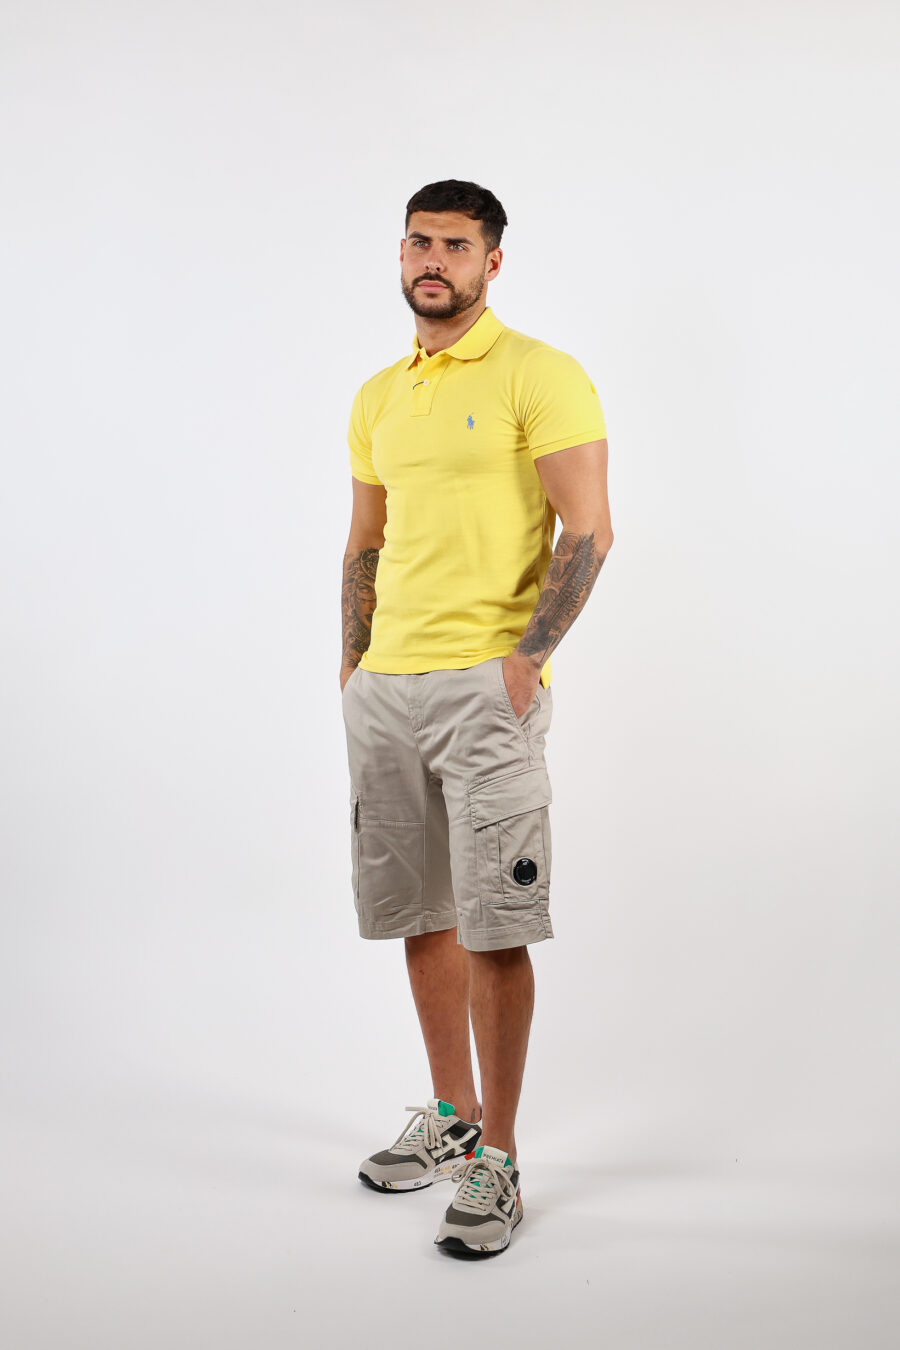 Gelbes und blaues T-Shirt mit Mini-Logo "Polo" - BLS Fashion 193